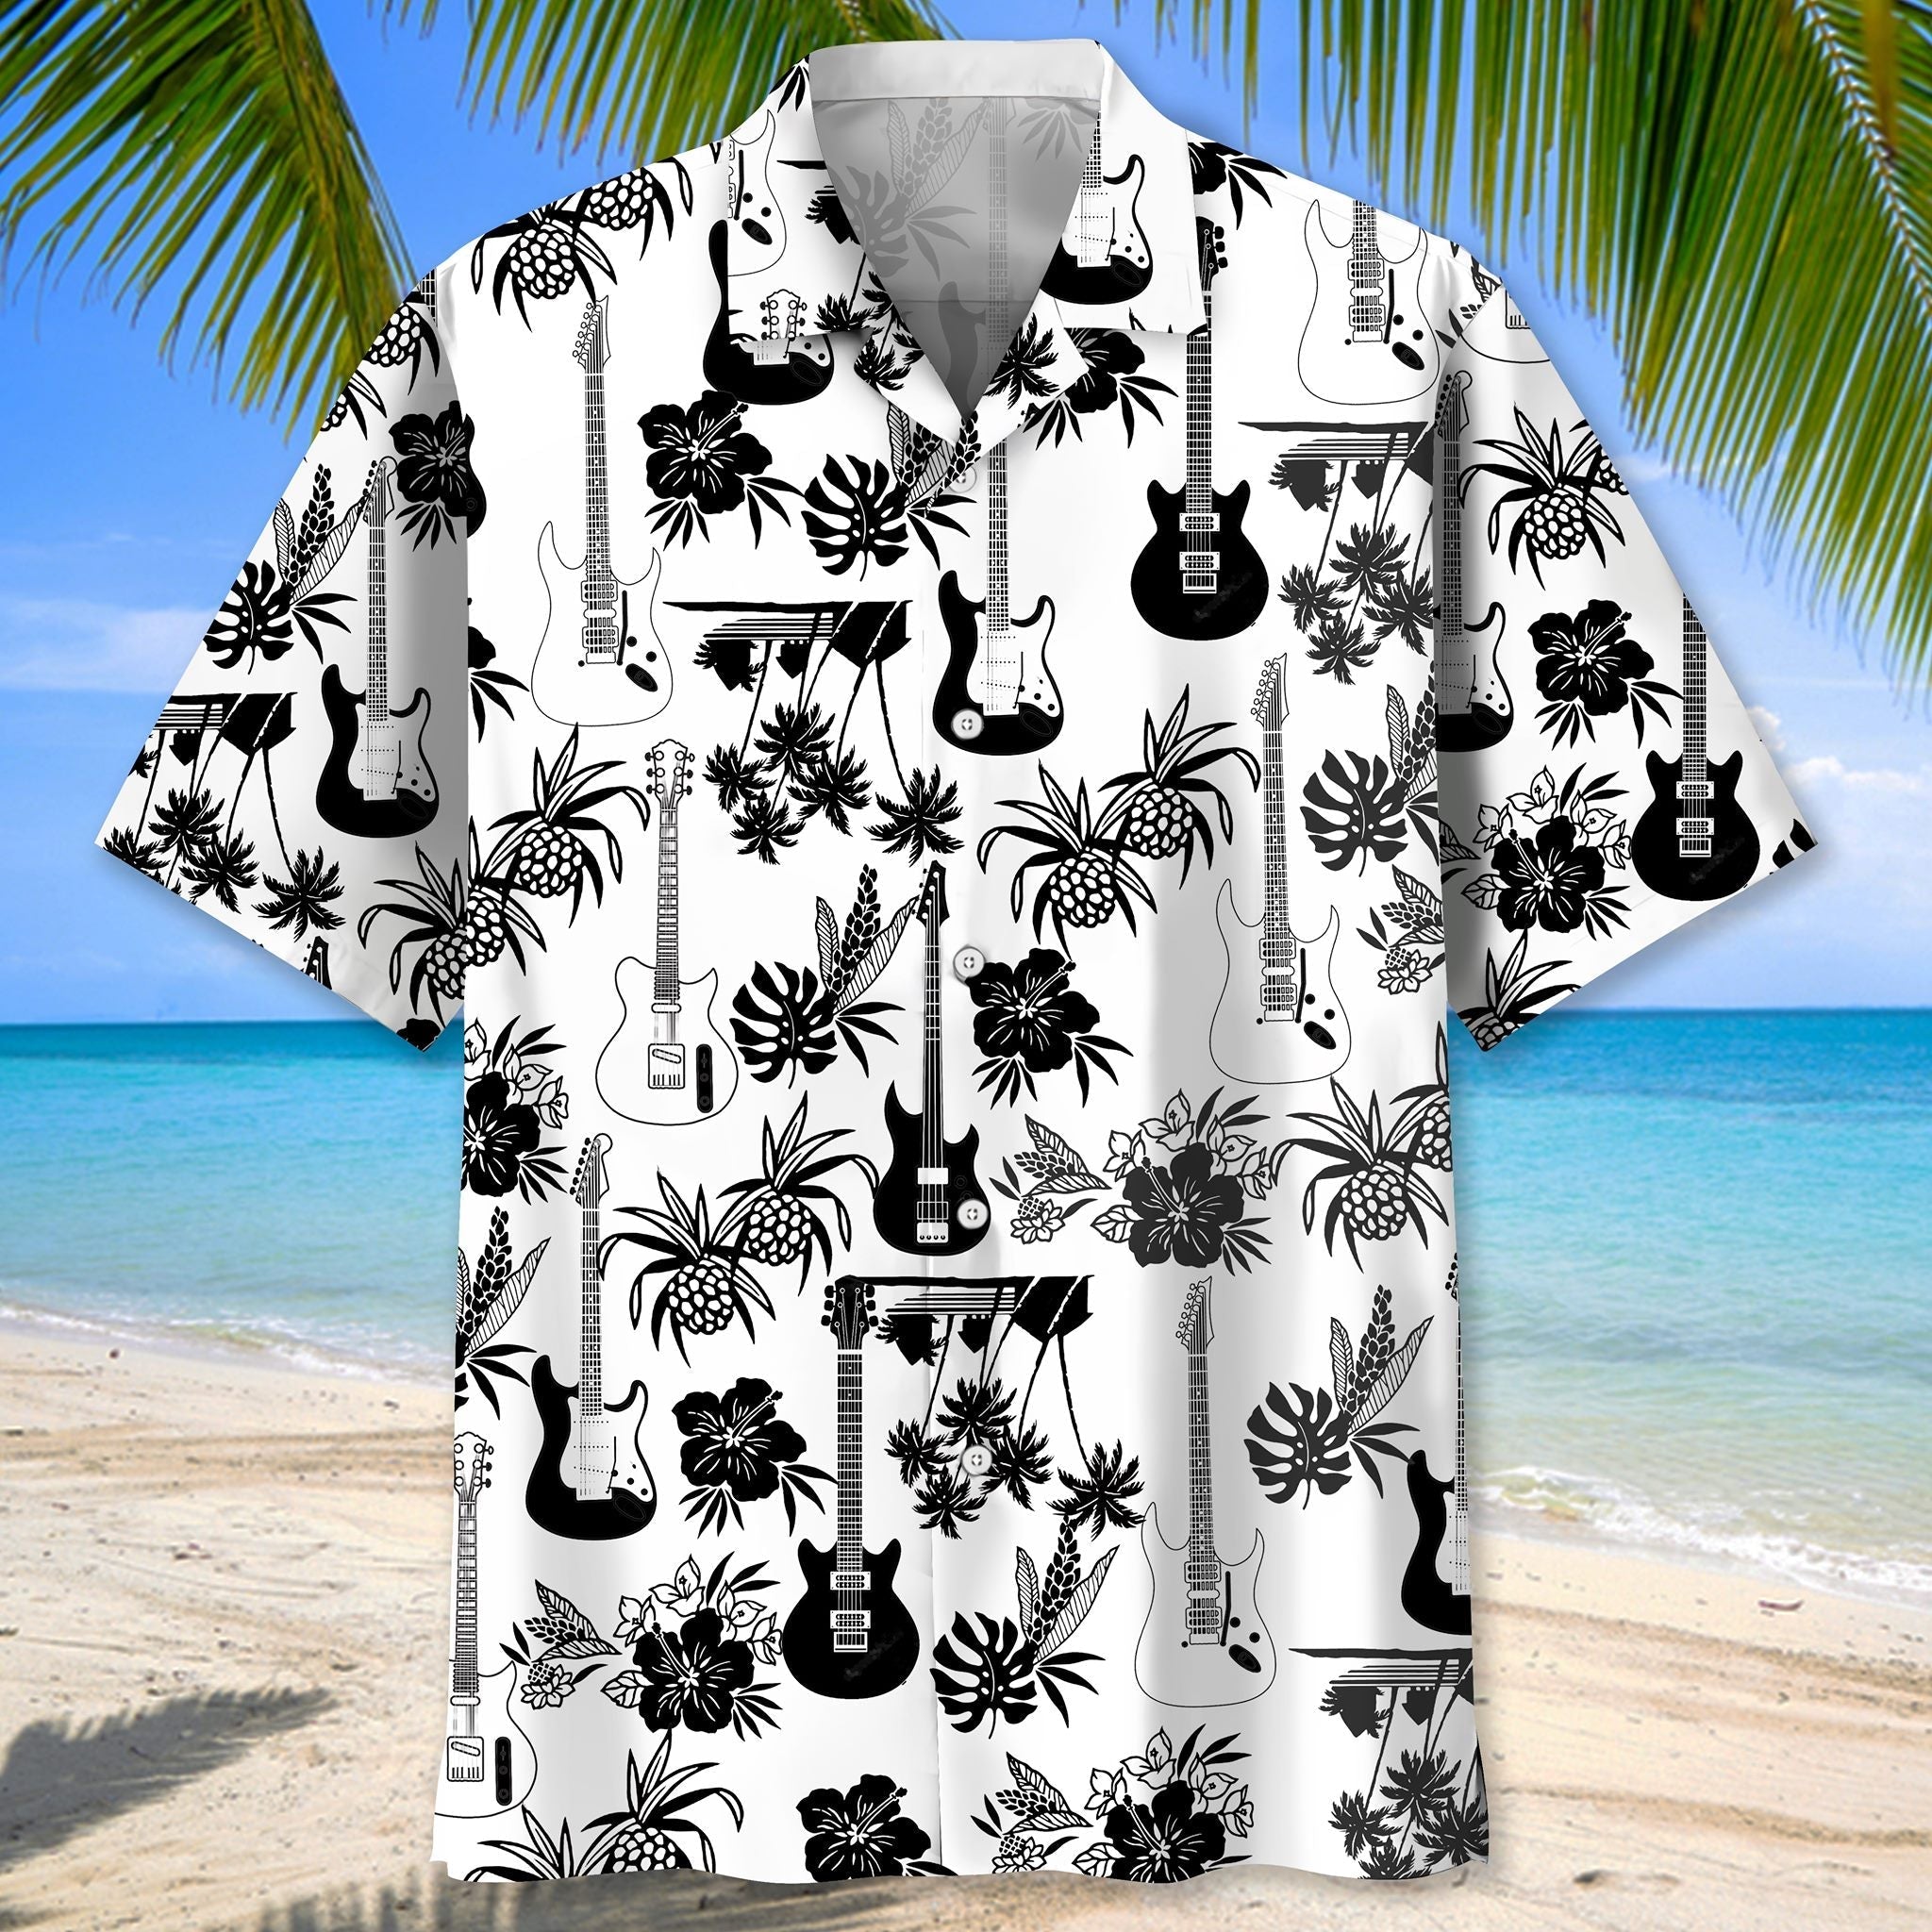 Guitar Hawaiian shirt black and white pineapples hibiscus